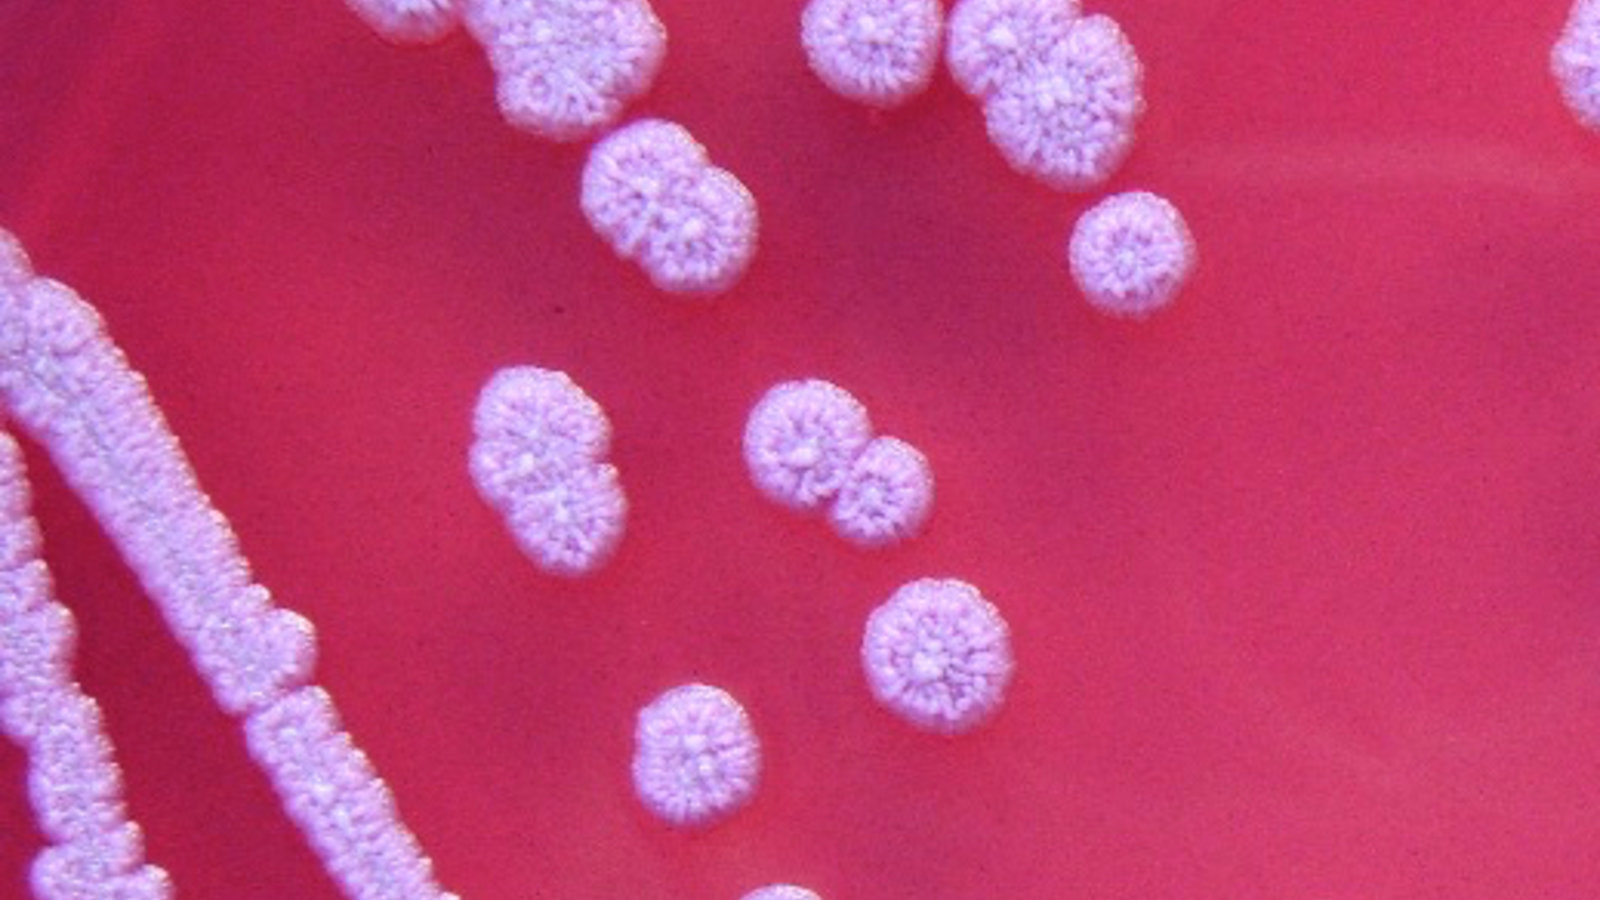 bacterioe-burkholderia.jpg